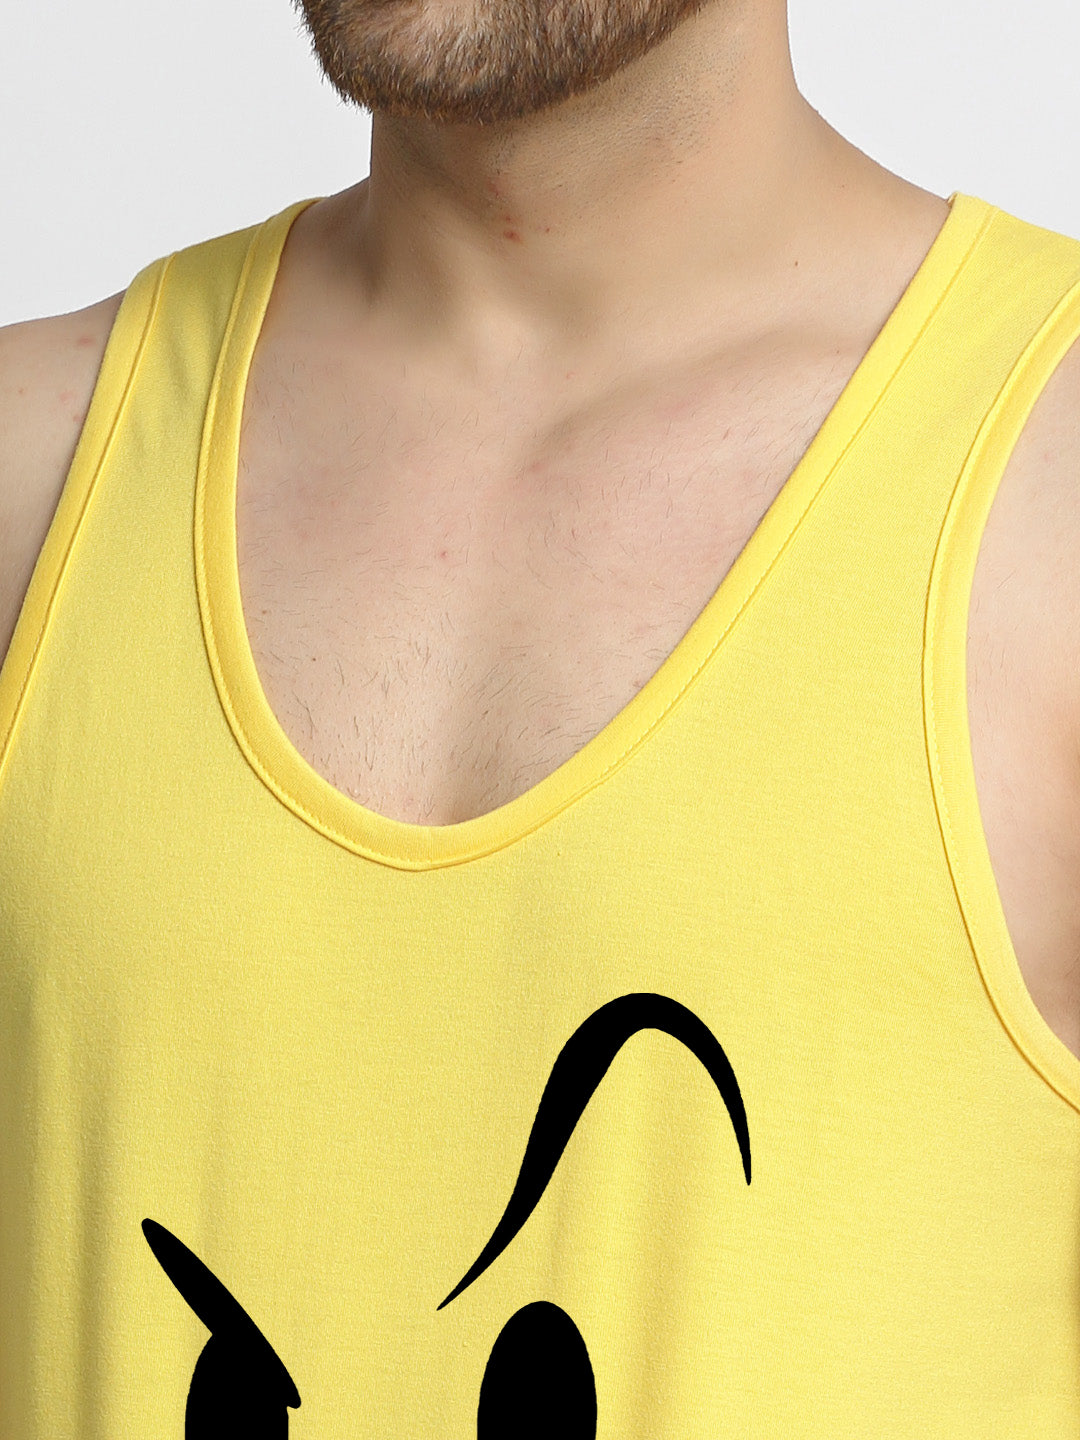 Men's Pack of 2 Black & Yellow Printed Gym Vest - Friskers